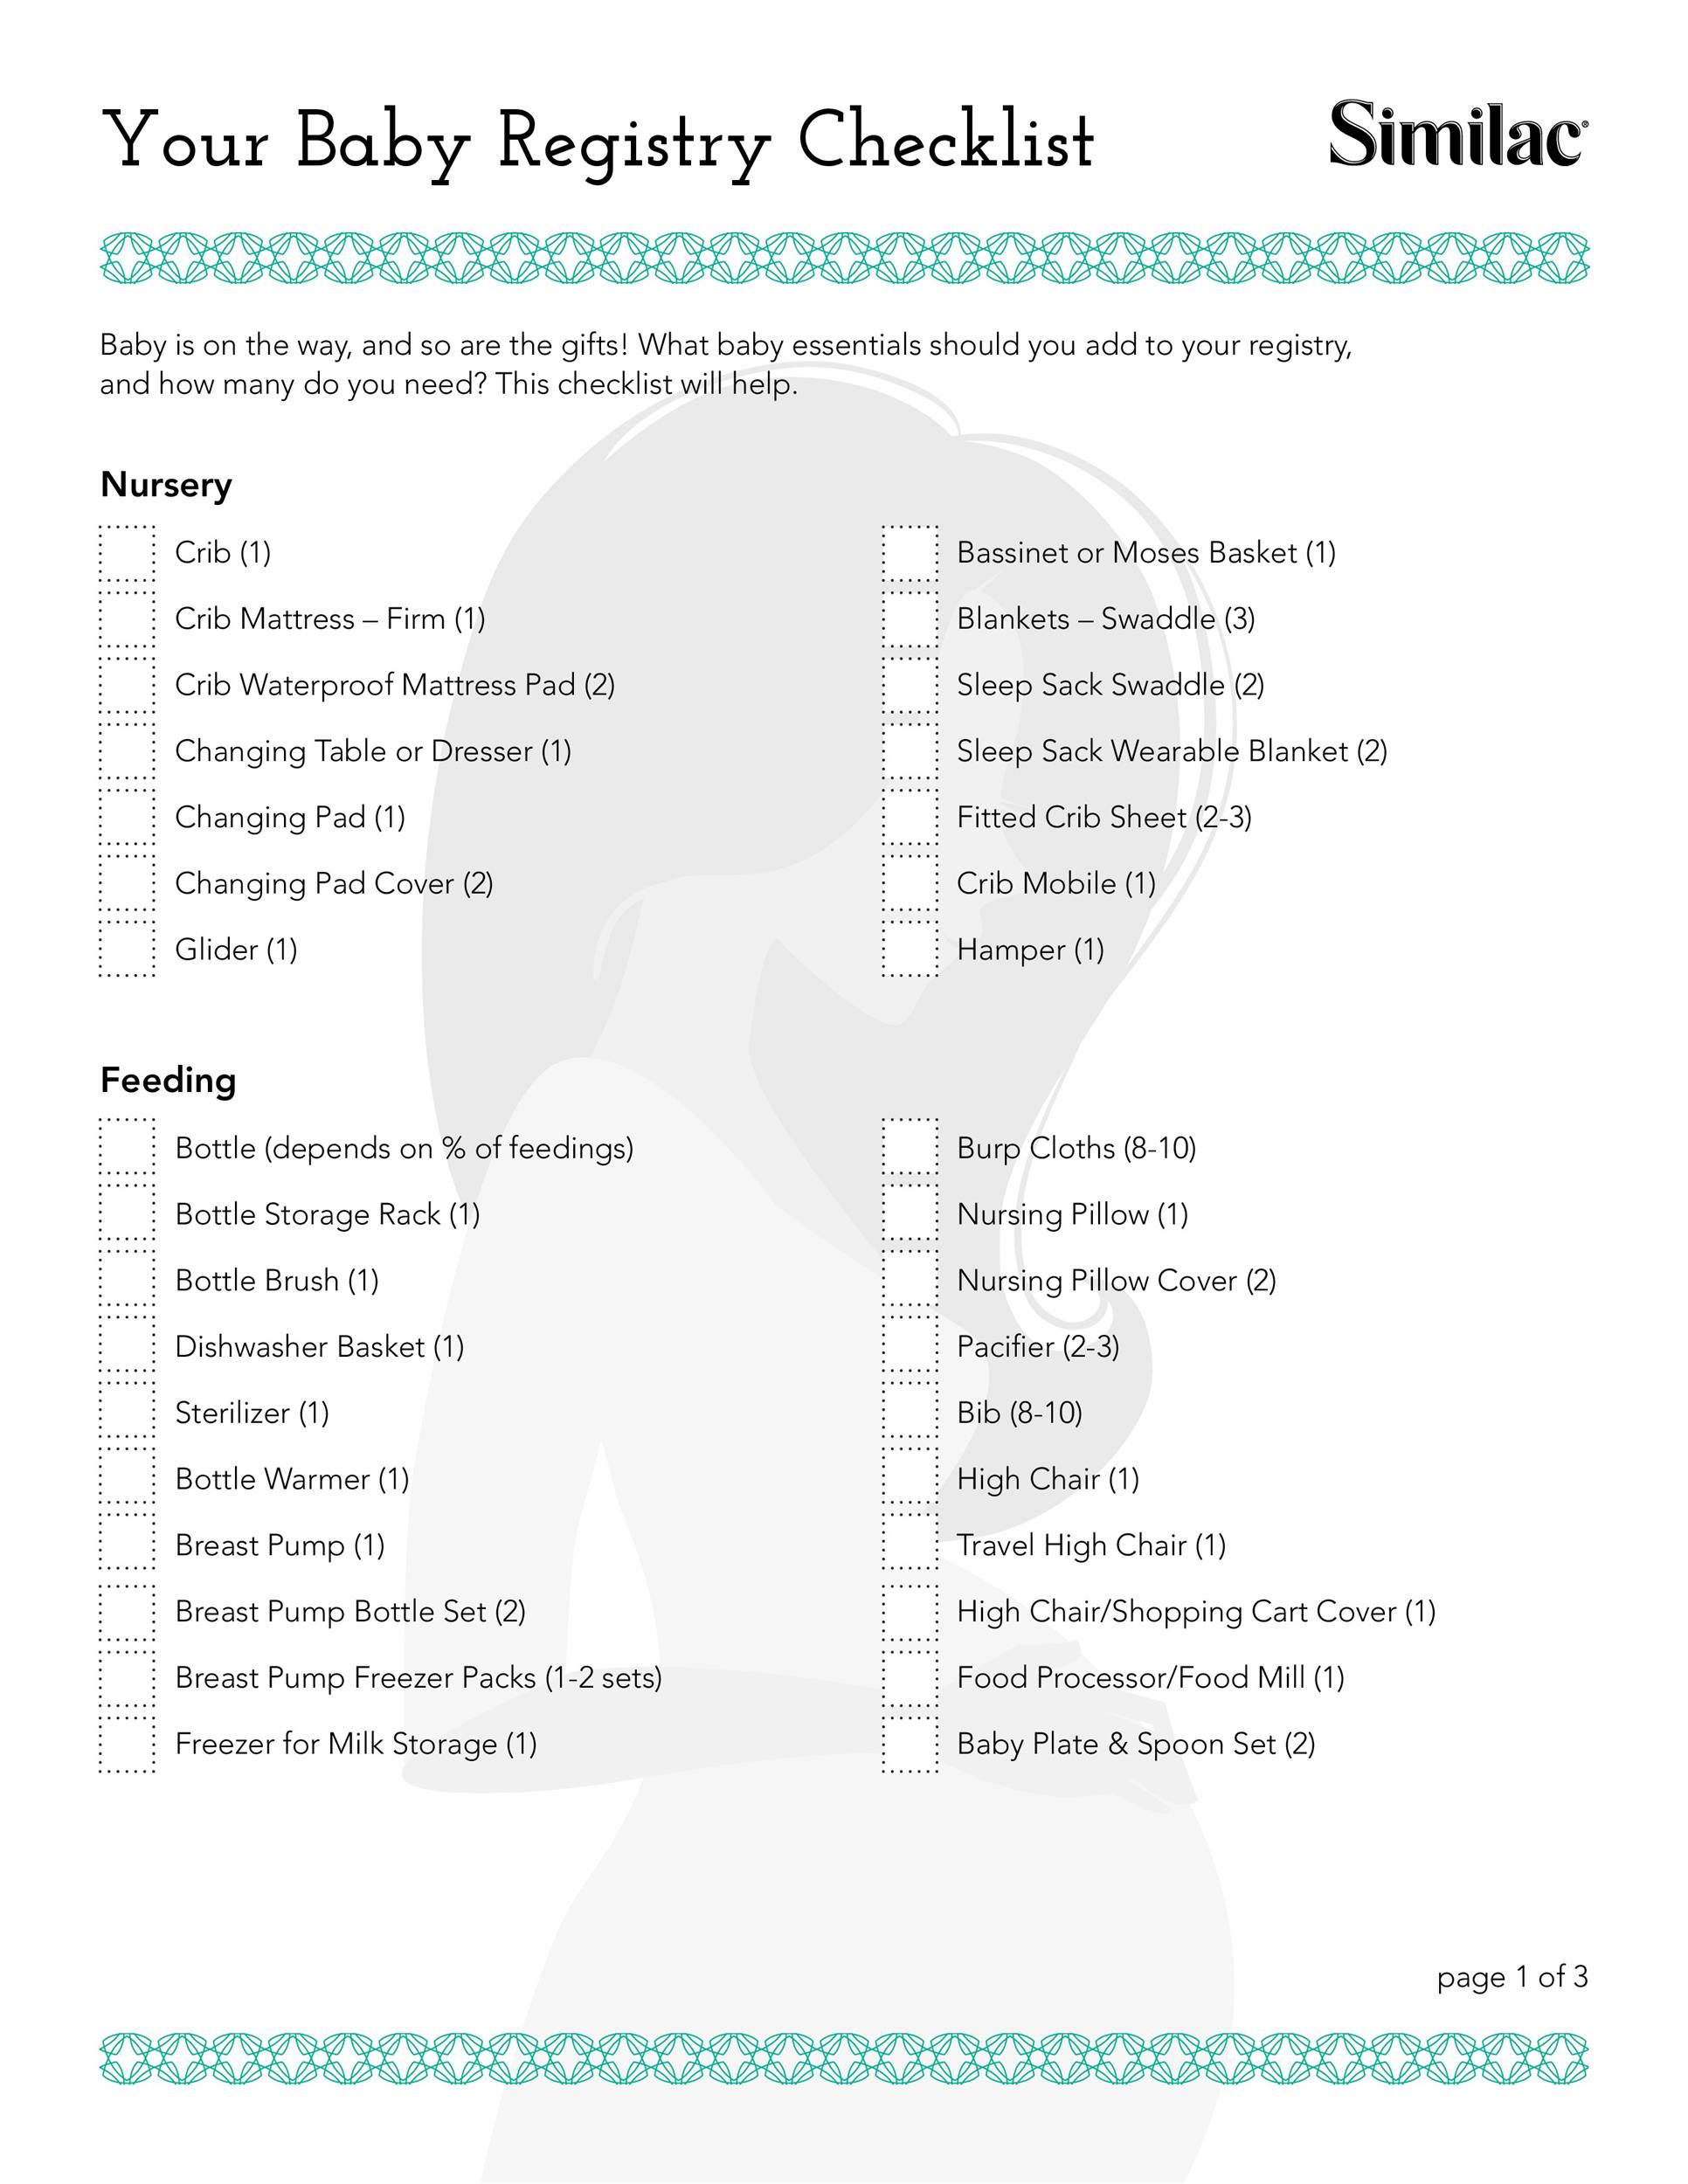 free printable baby registry checklist